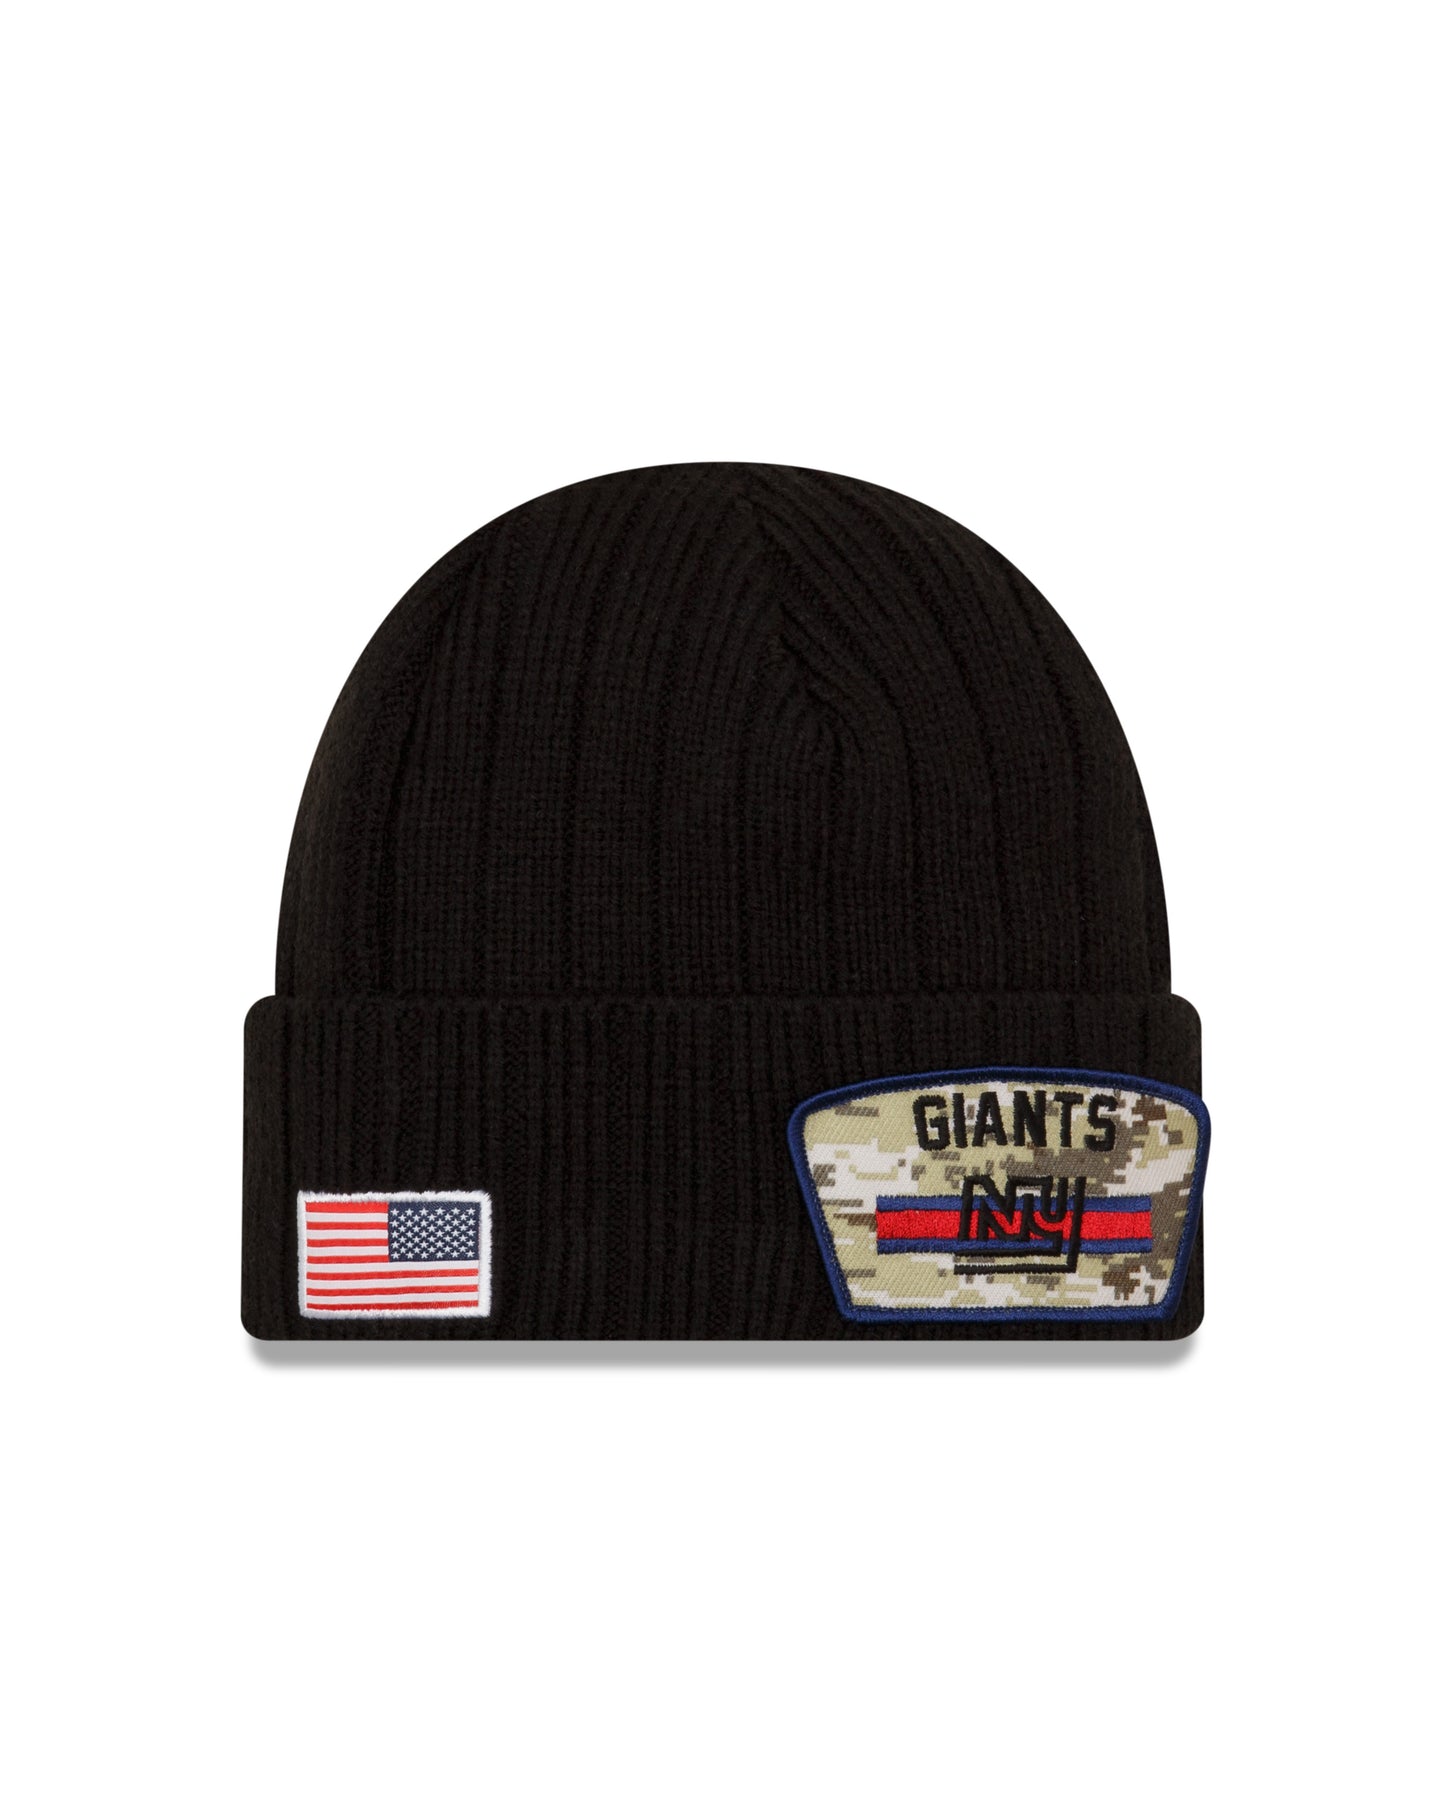 New York Giants 2021 Sideline Salute to Service Knit Hat - Black